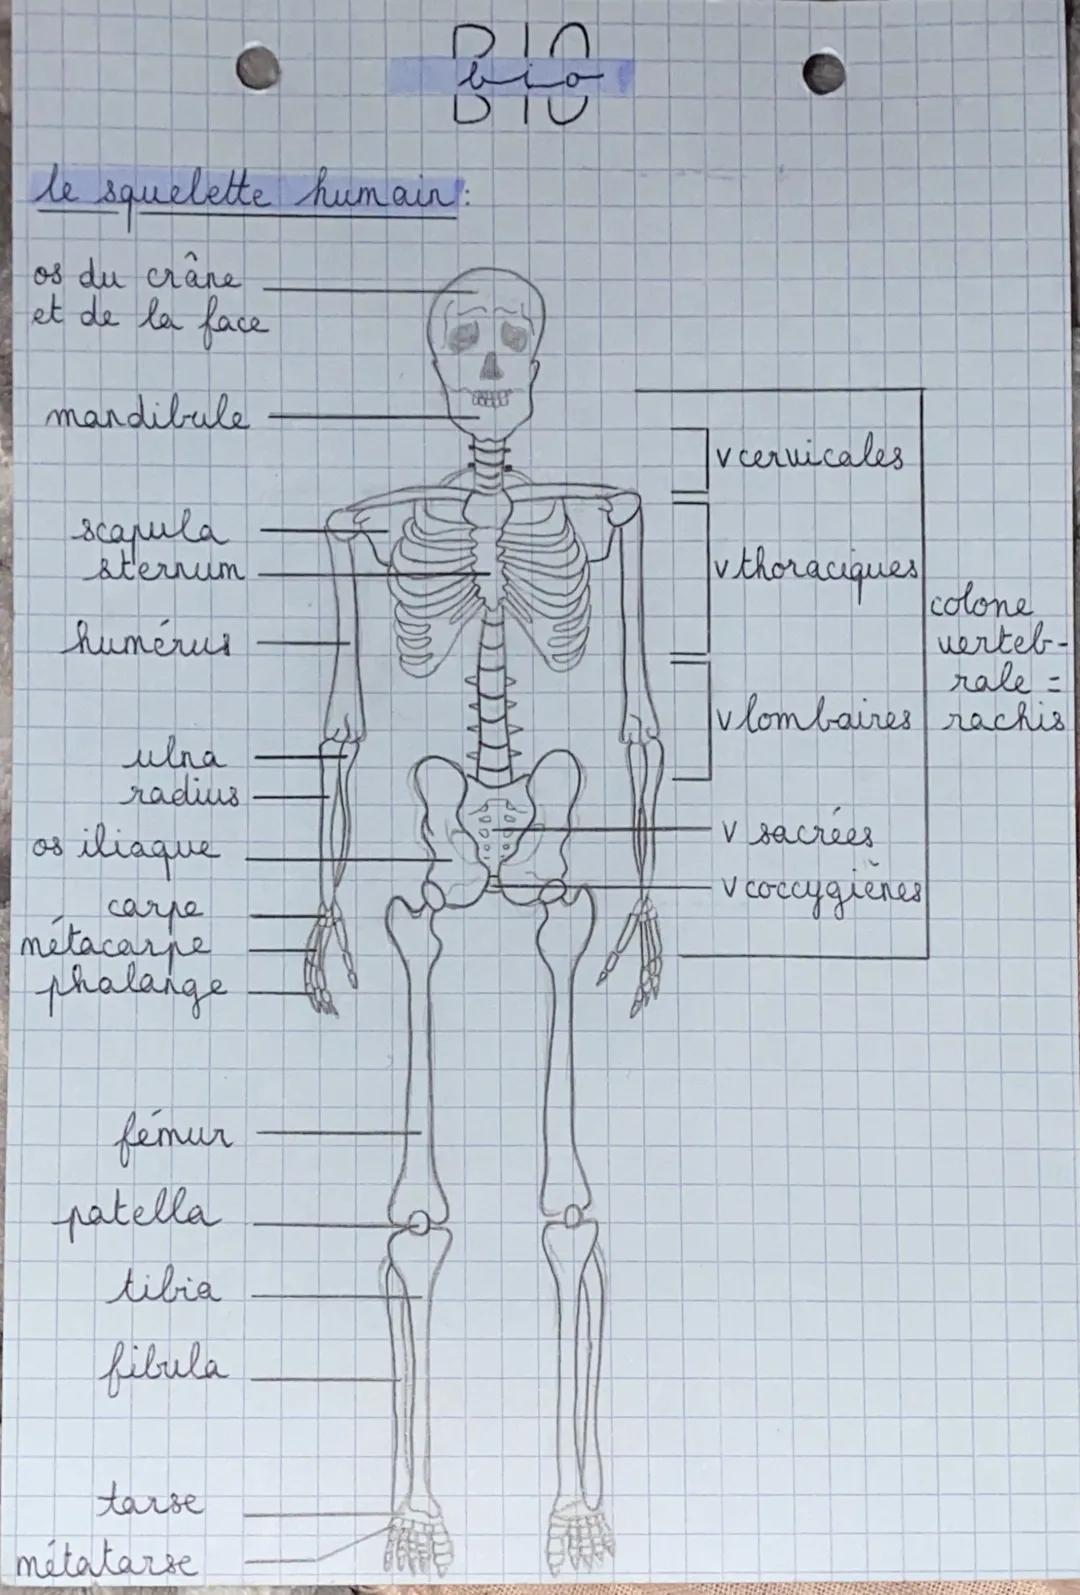 le squelette humain:
os du crâne
et de la face
mandibule
scapula
sternum
humerus
ulna
radius
iliaque
carpe
metacarpe
phalange
femur
patella
